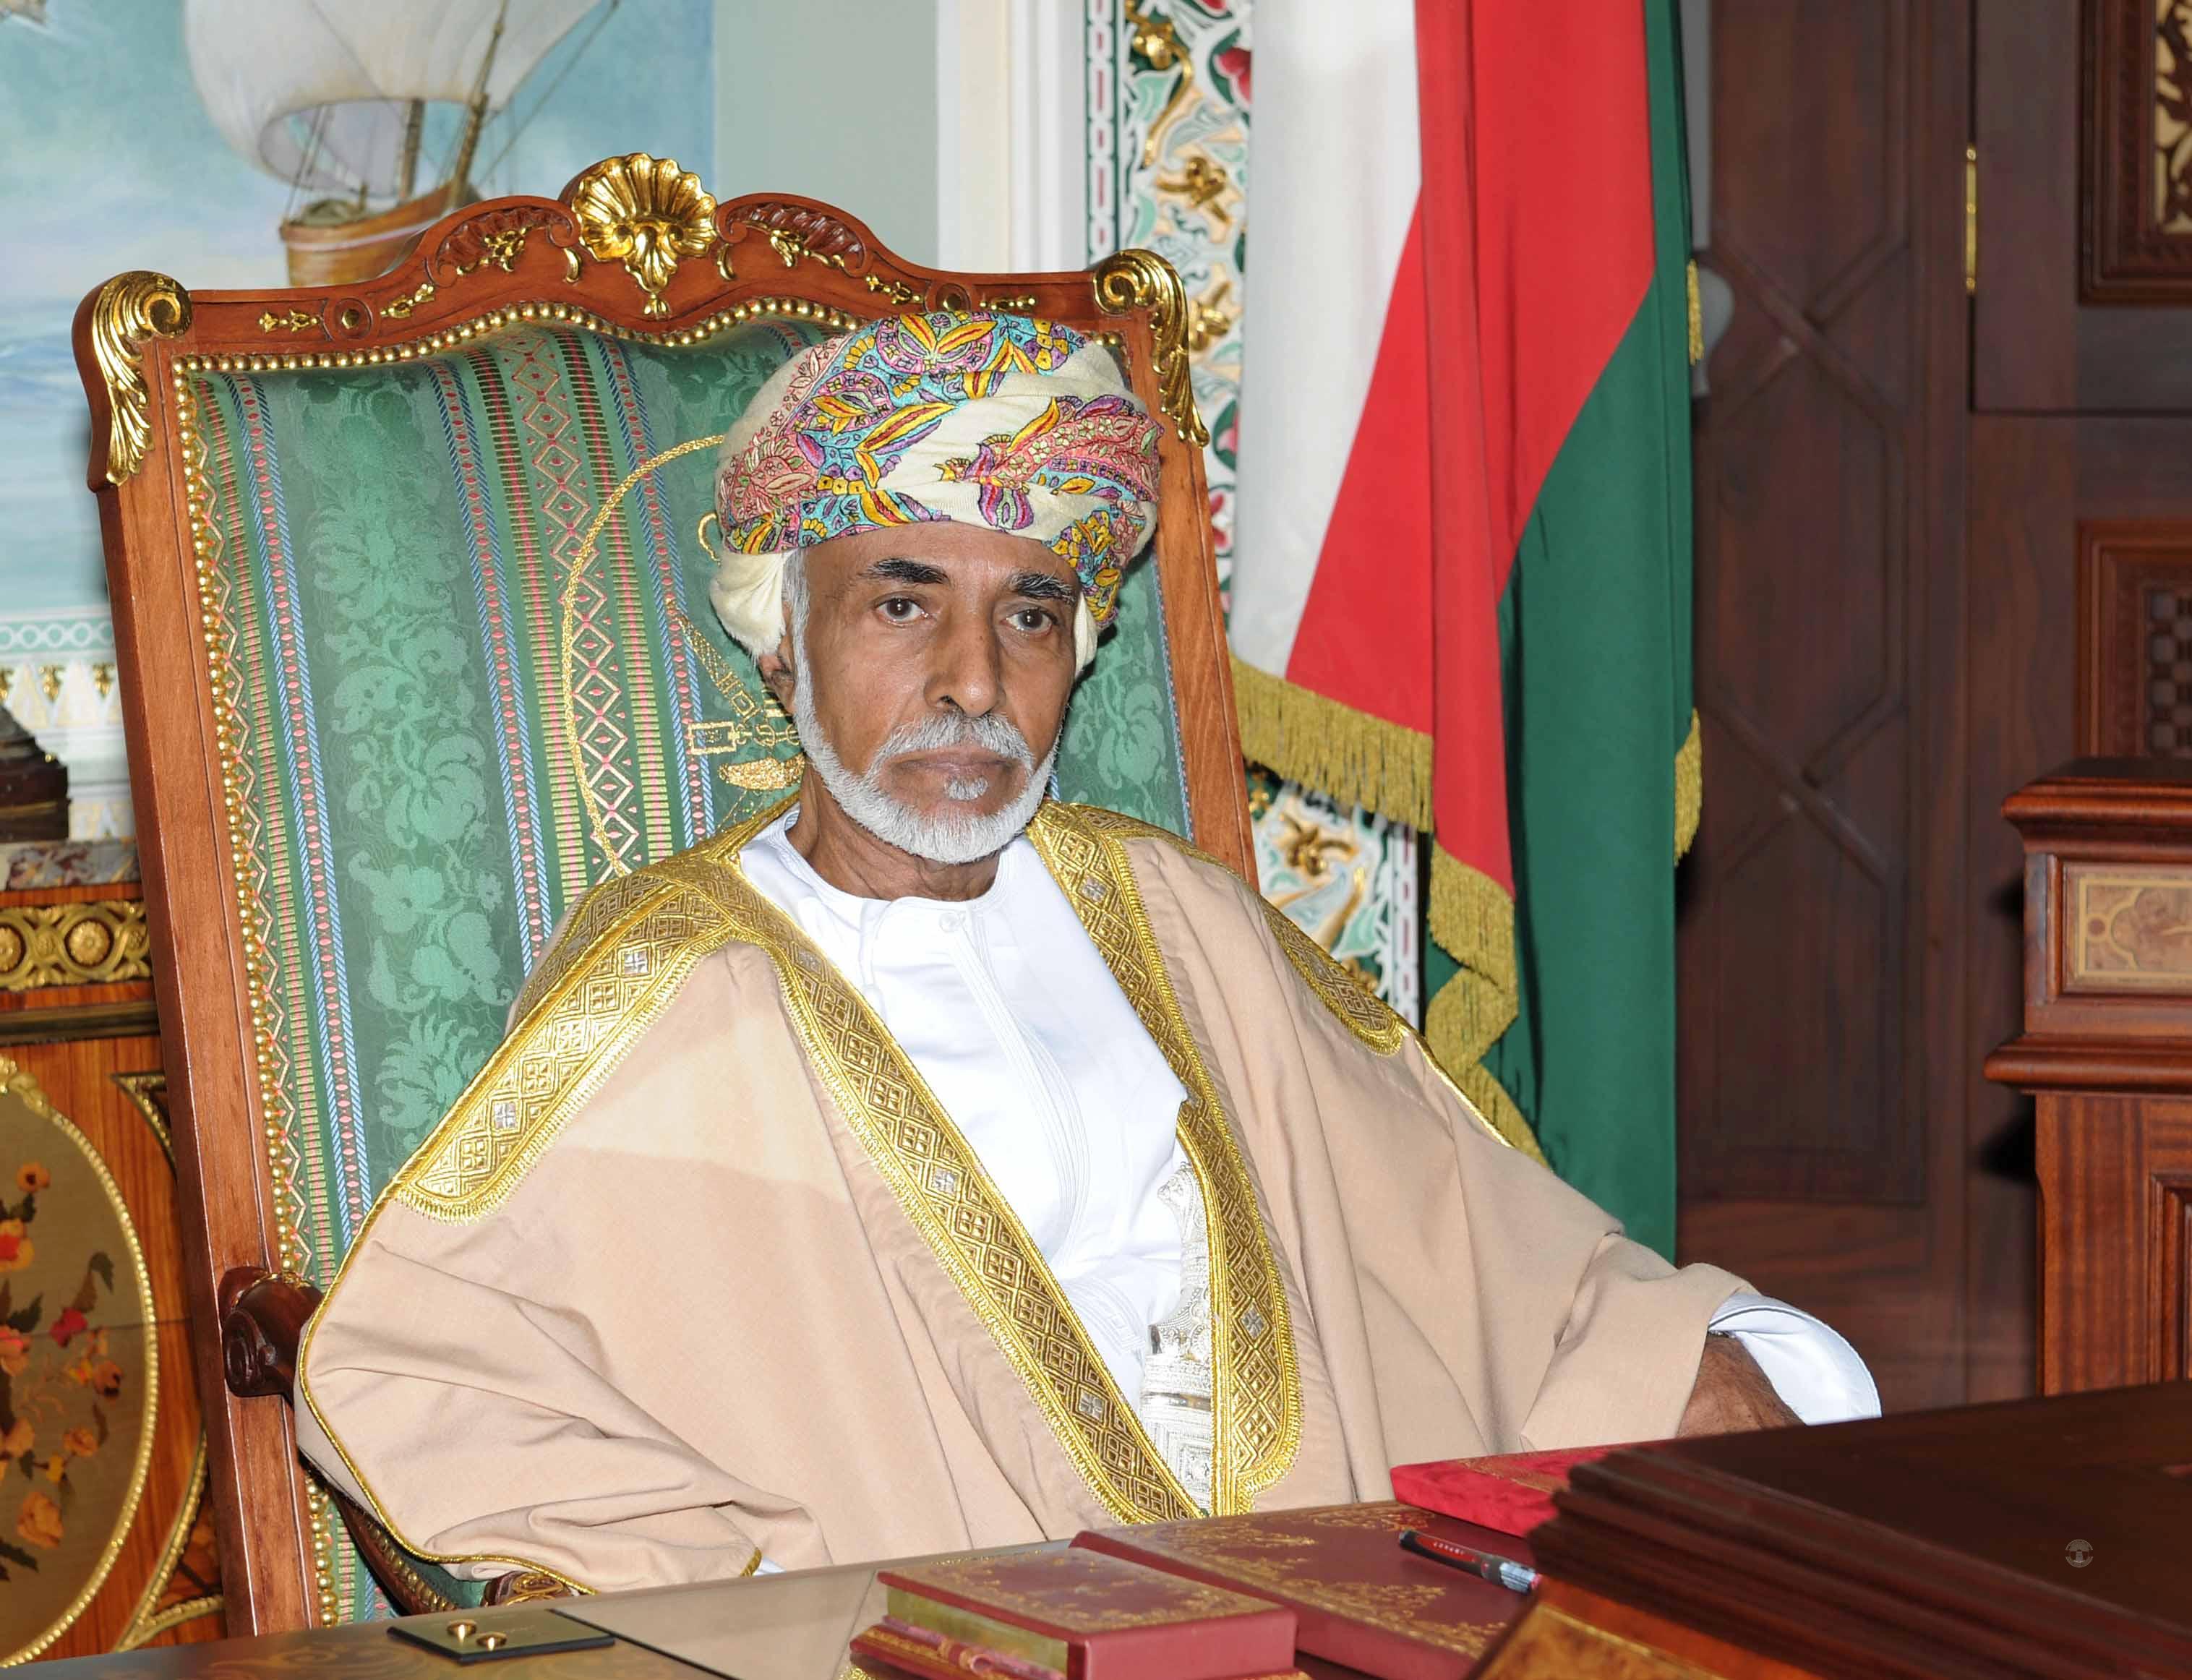 His Majesty Sultan Qaboos sends greetings to Kenya